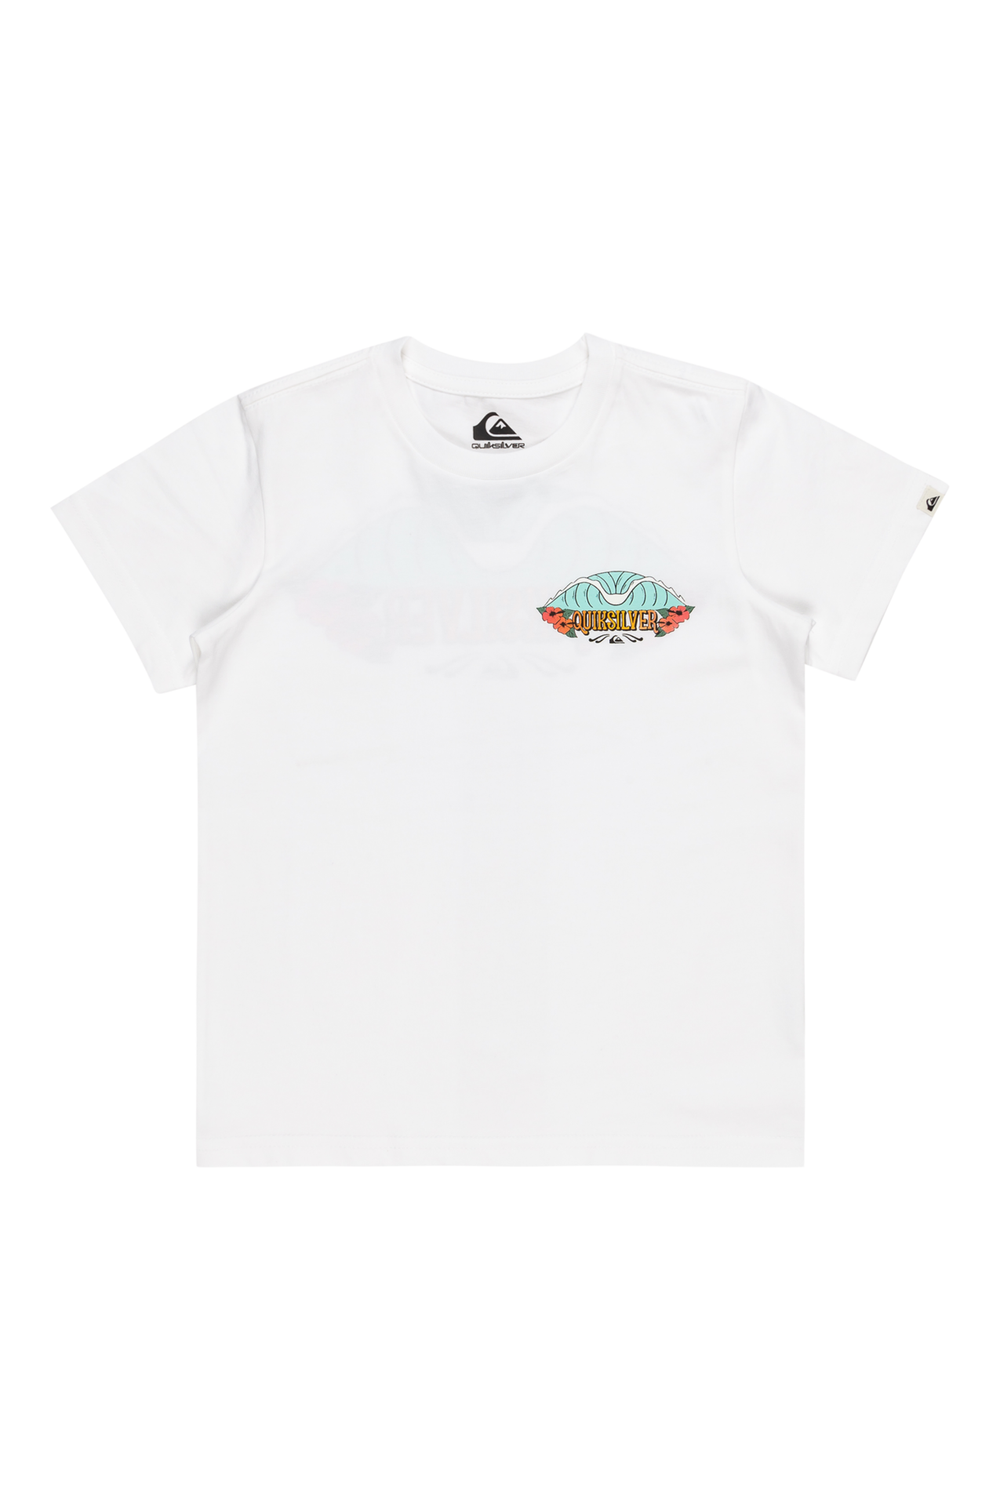 Quiksilver Tropical Fade Short Sleeve T-Shirt Boys White